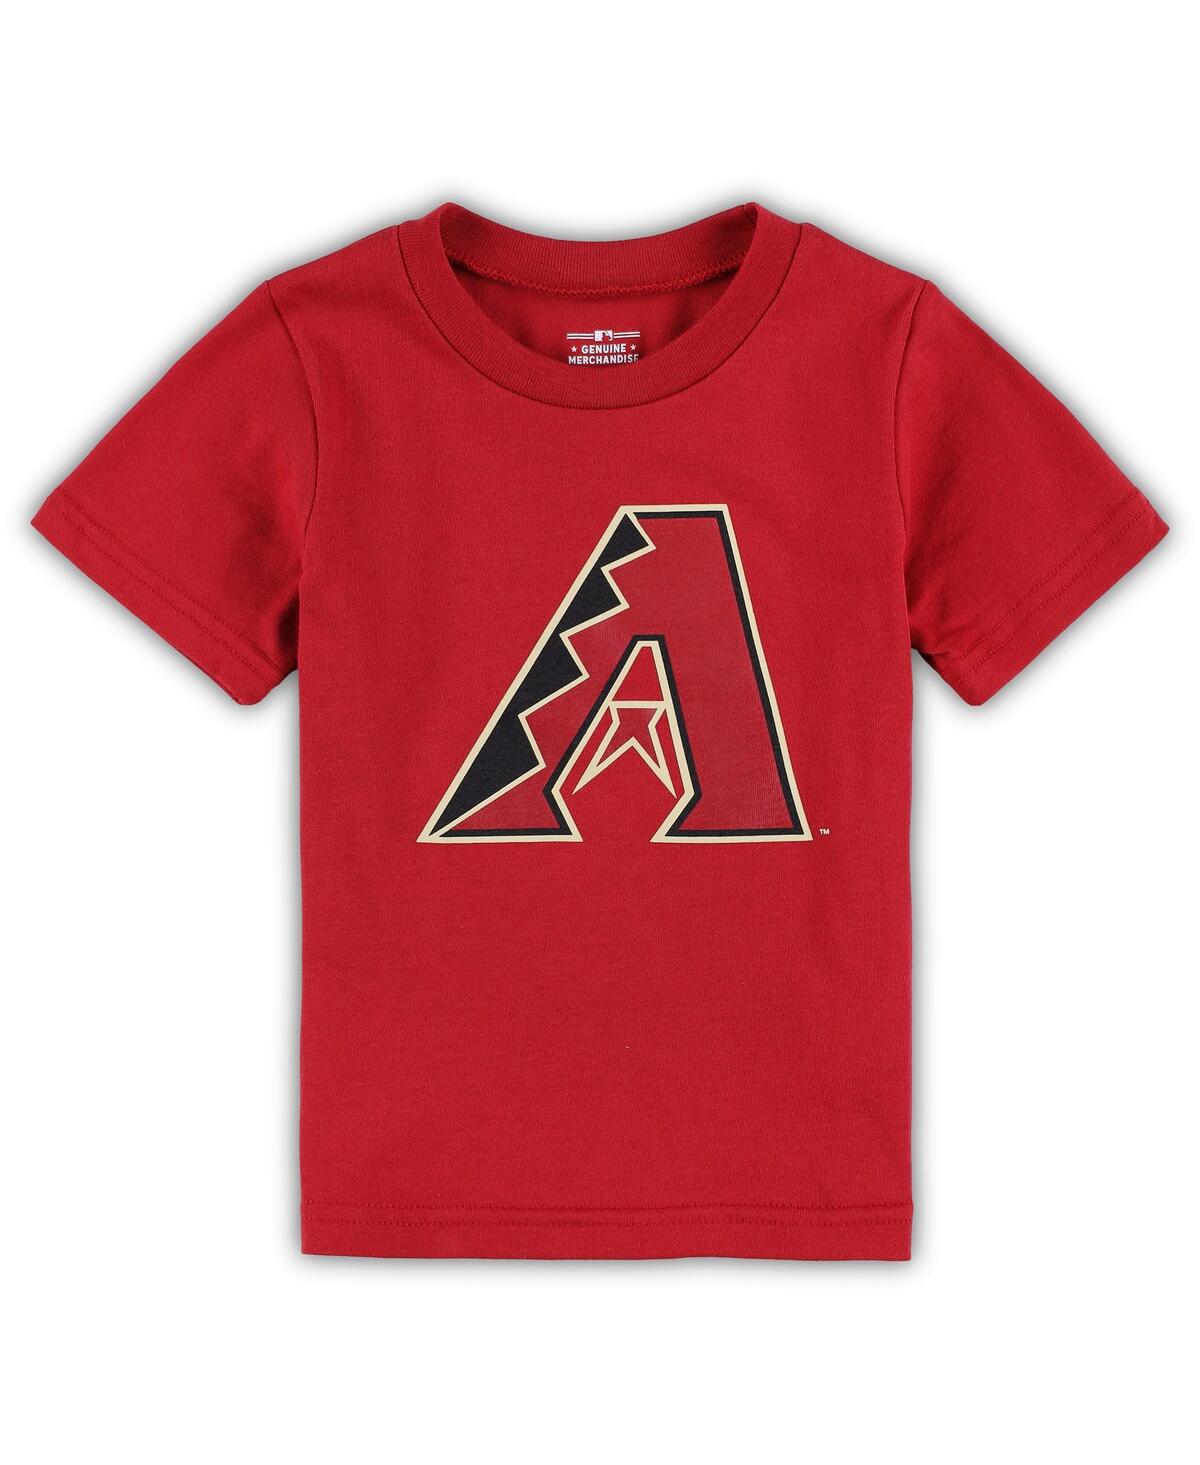 Outerstuff Babies' Toddler Boys And Girls Red Arizona Diamondbacks Team Crew Primary Logo T-shirt